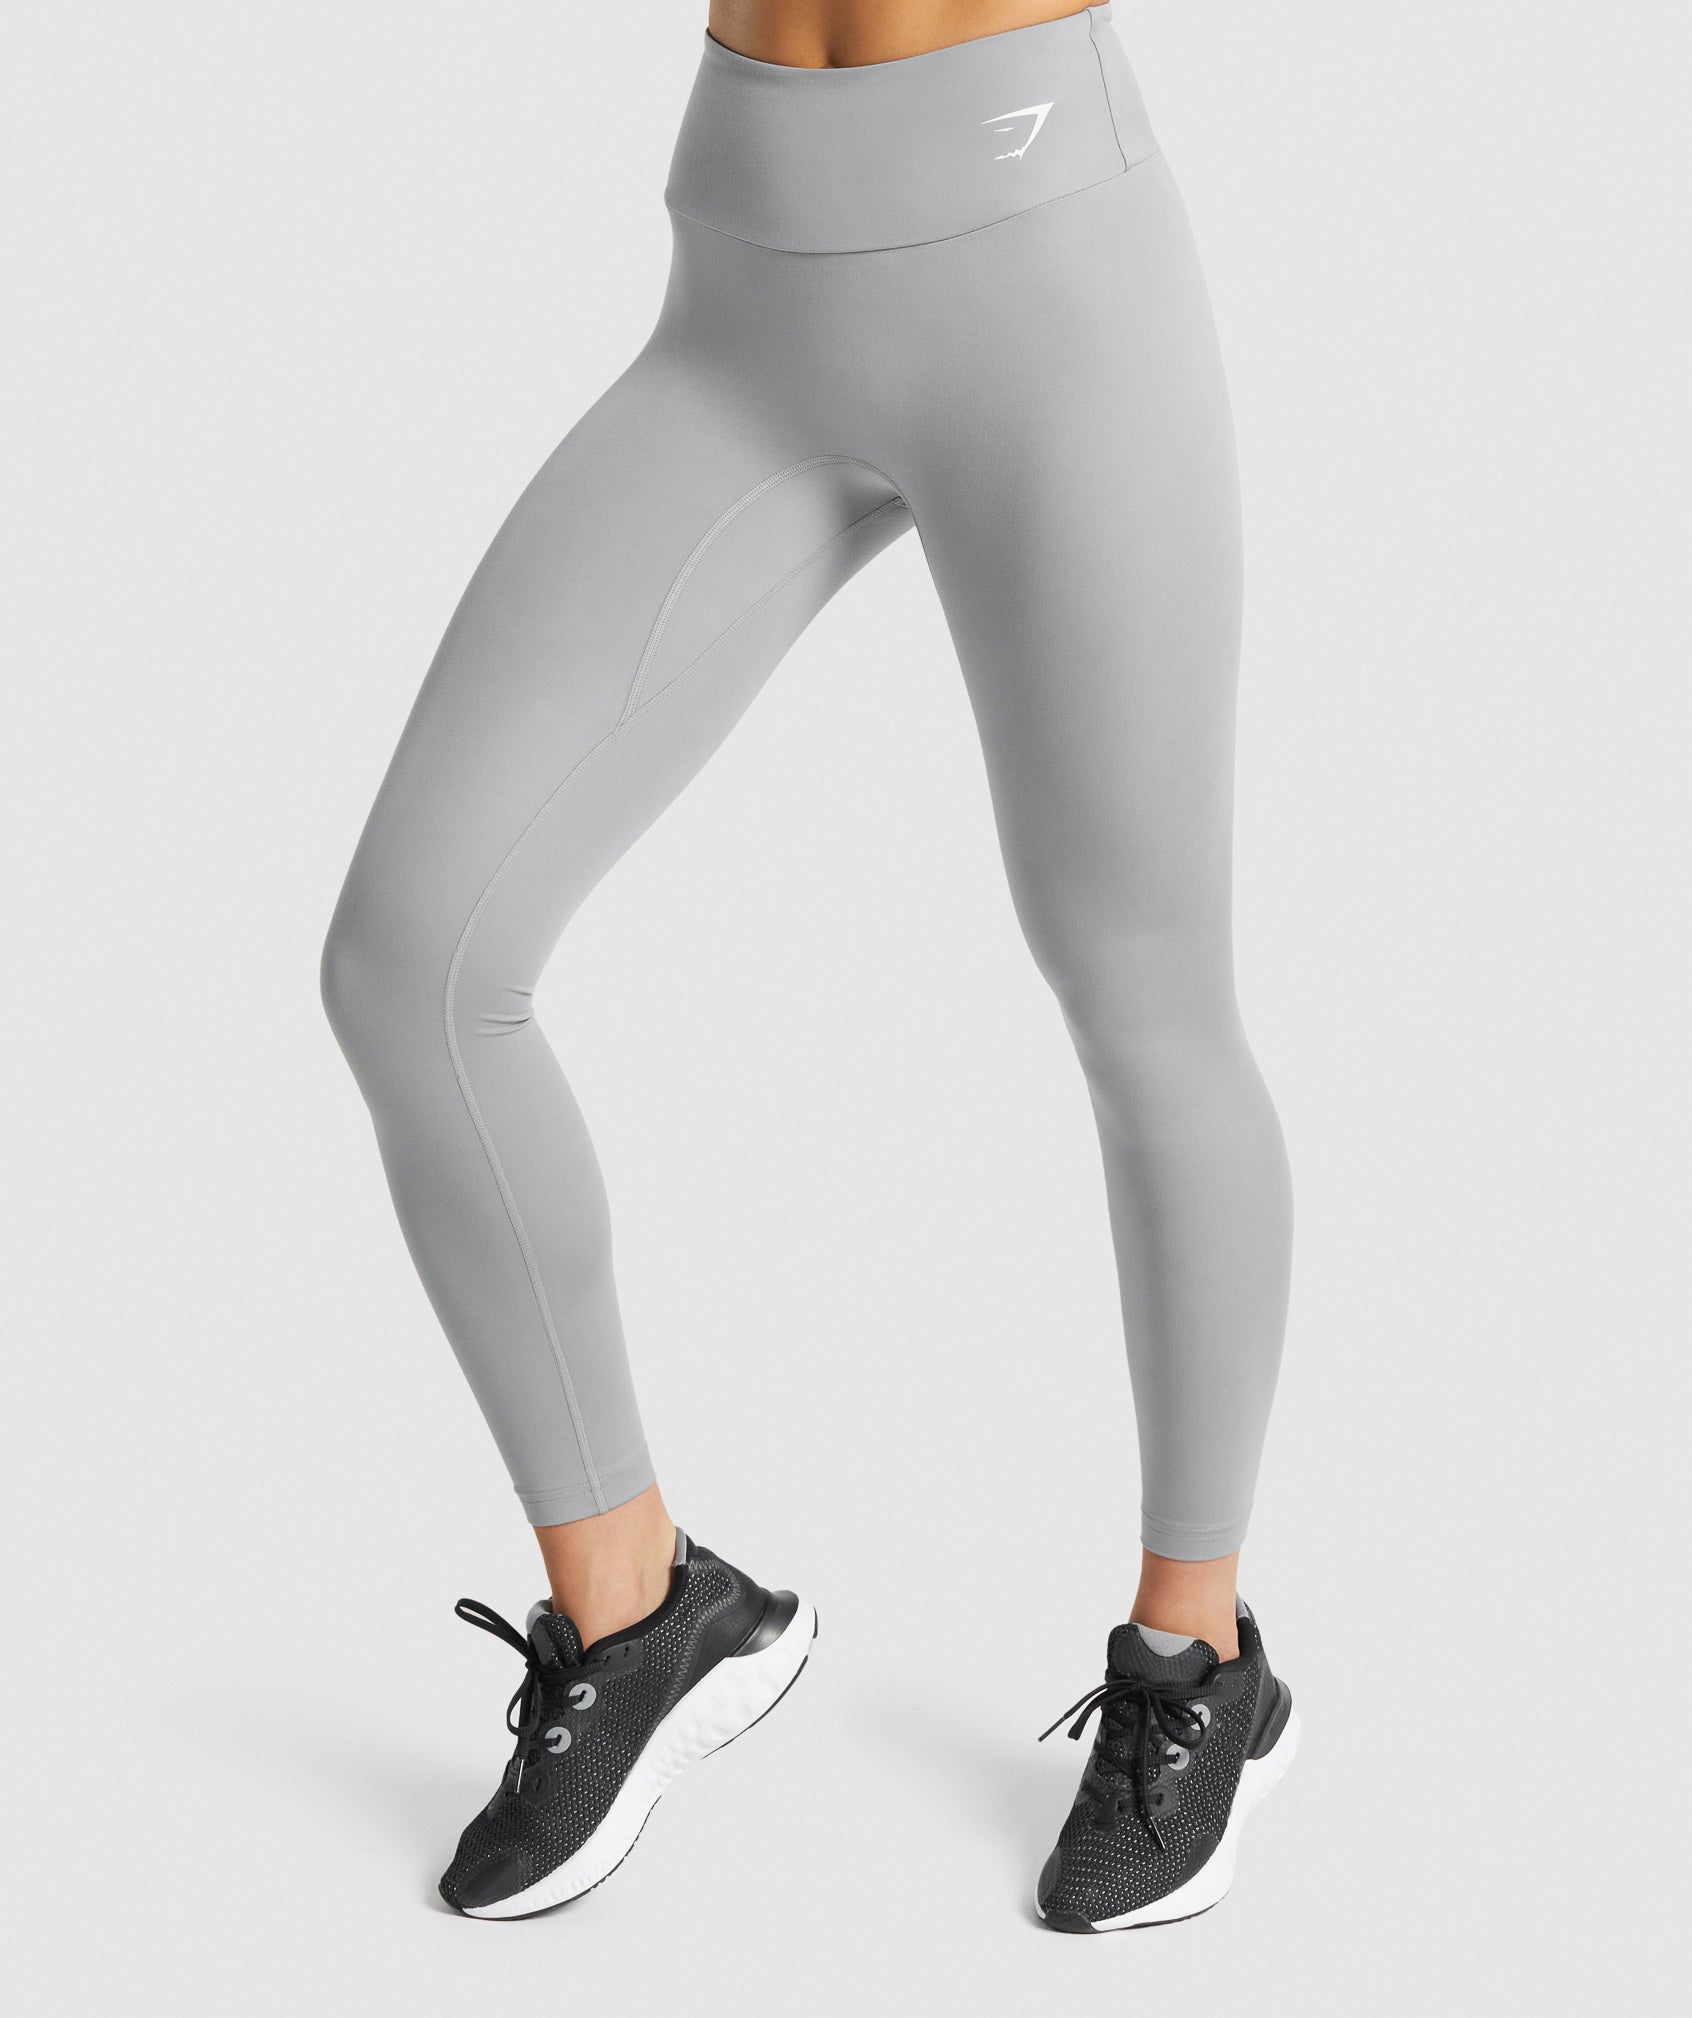 Leggings Gymshark Grey size XS International in Cotton - 22751527